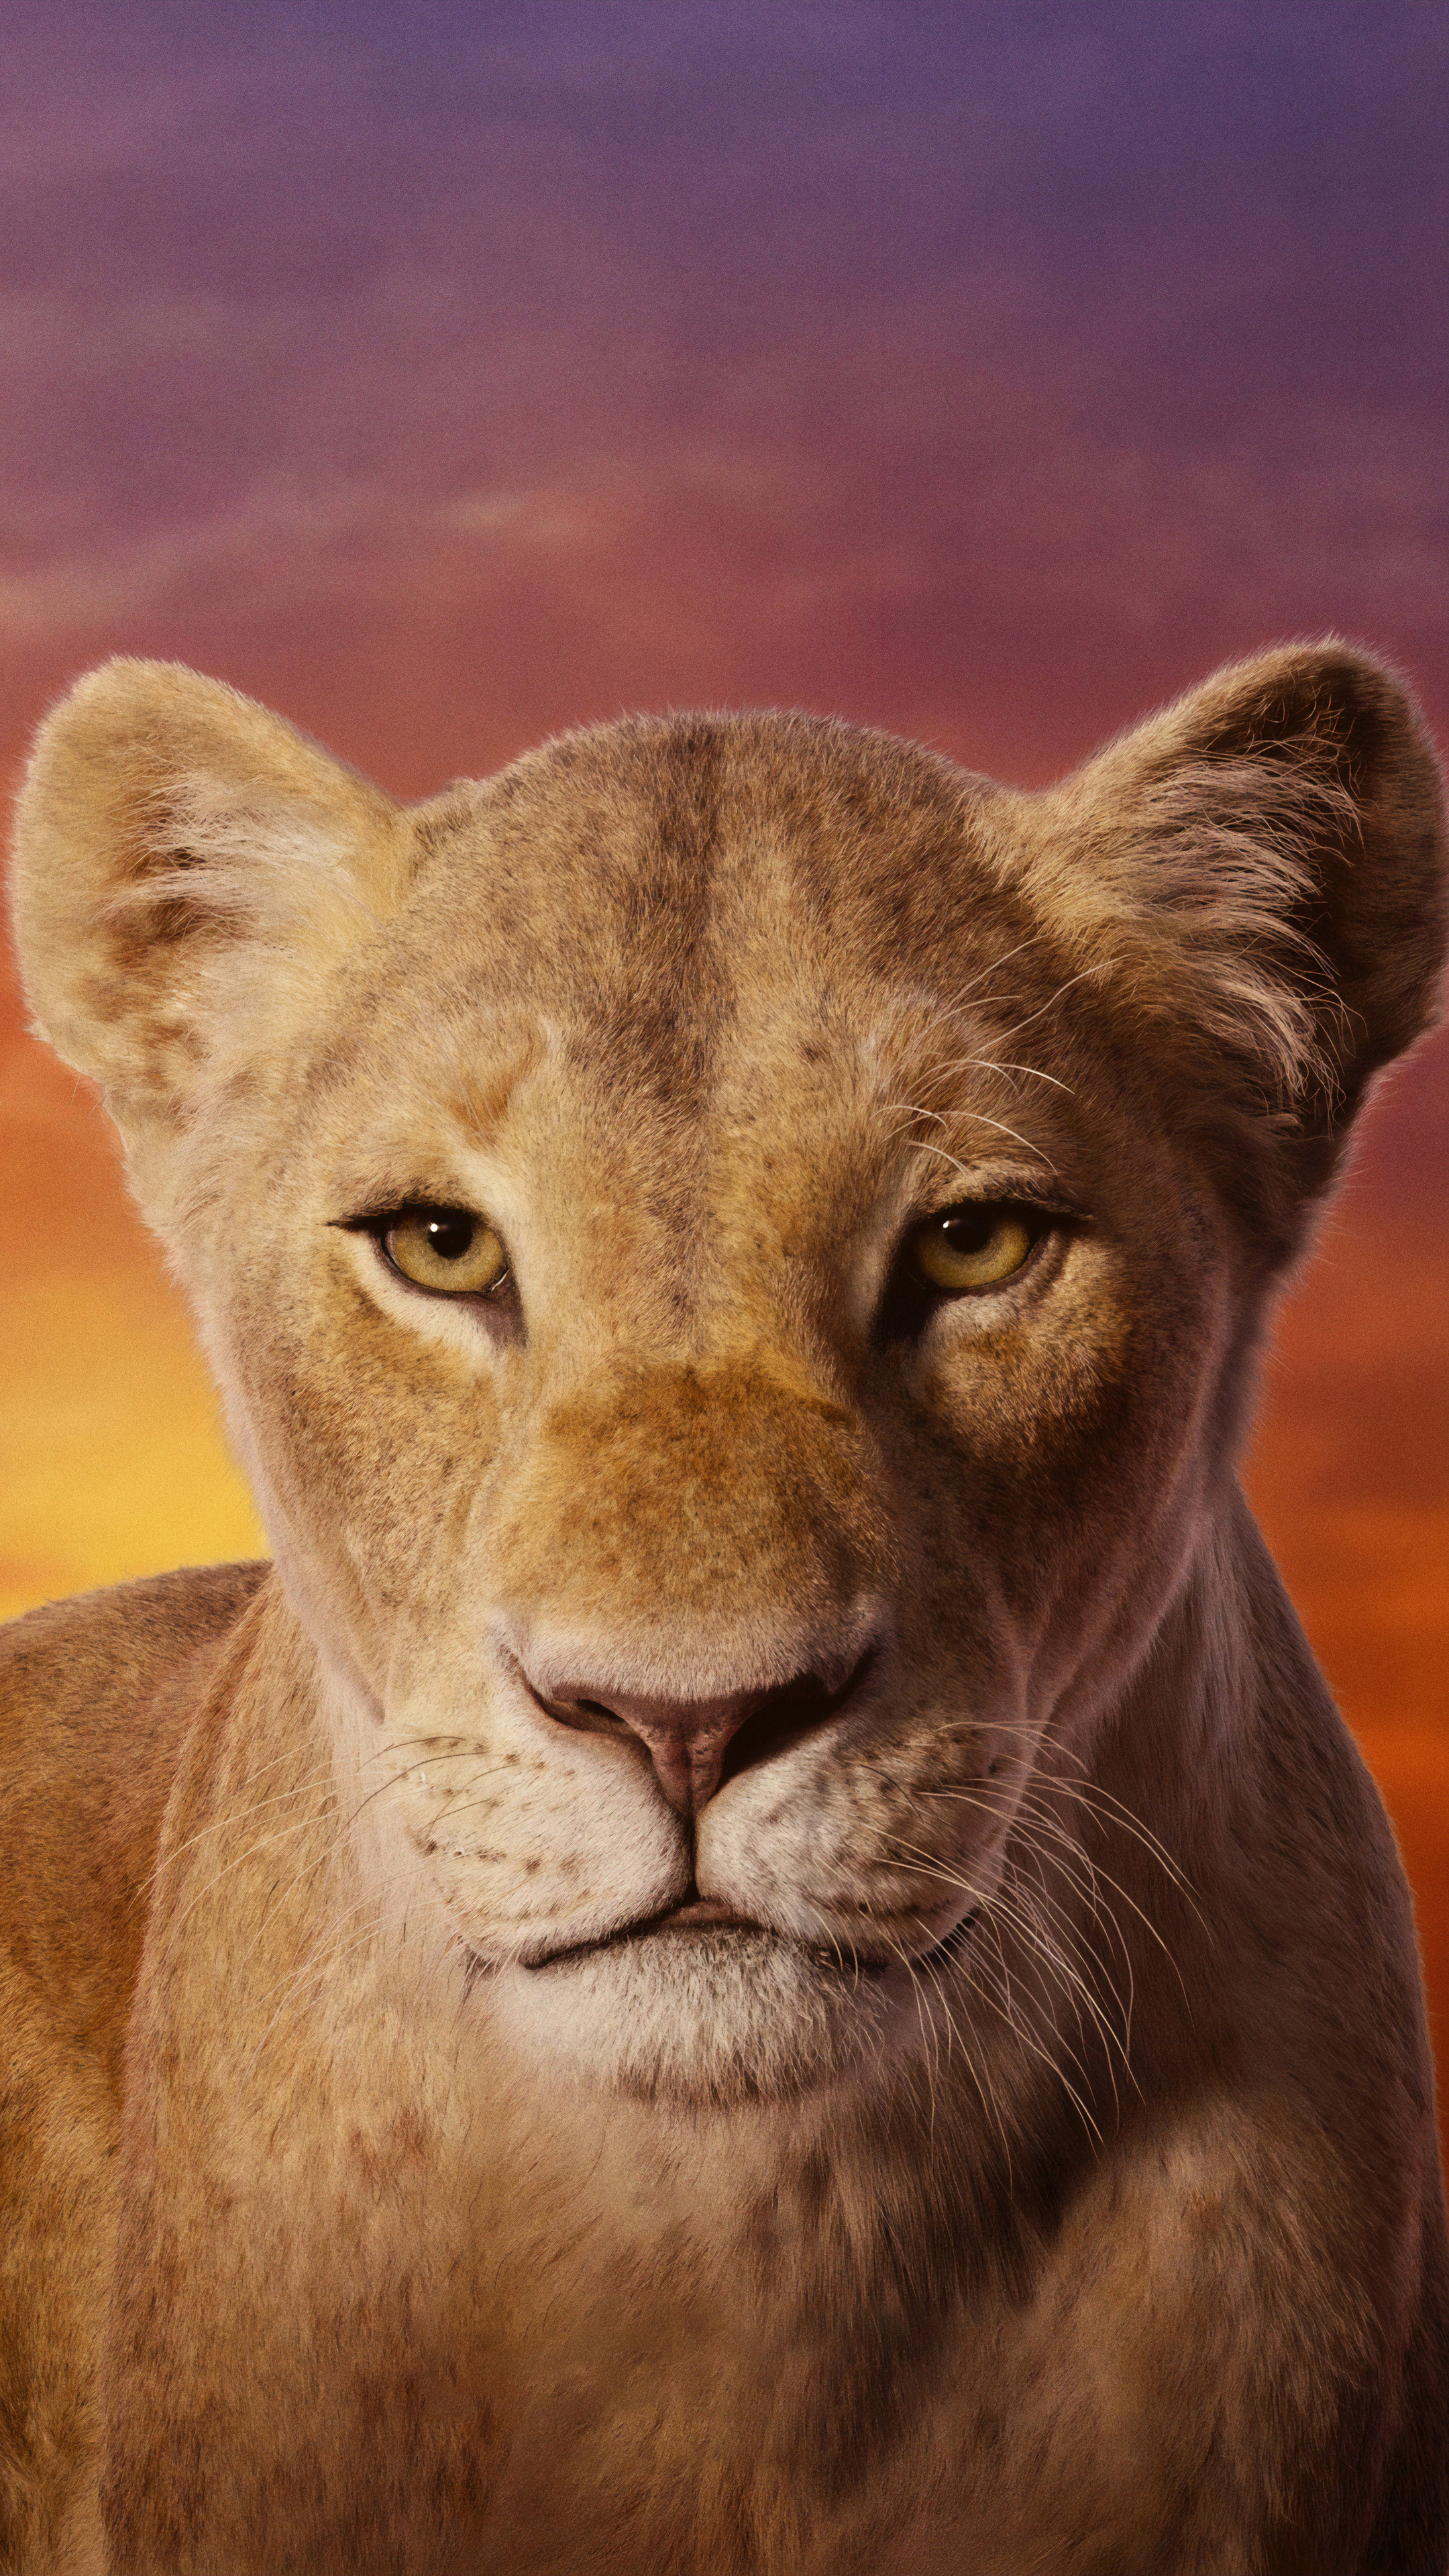 The Lion King, Beyonce as Nala, Stunning 4K imagery, Iconic characters, 2160x3840 4K Phone